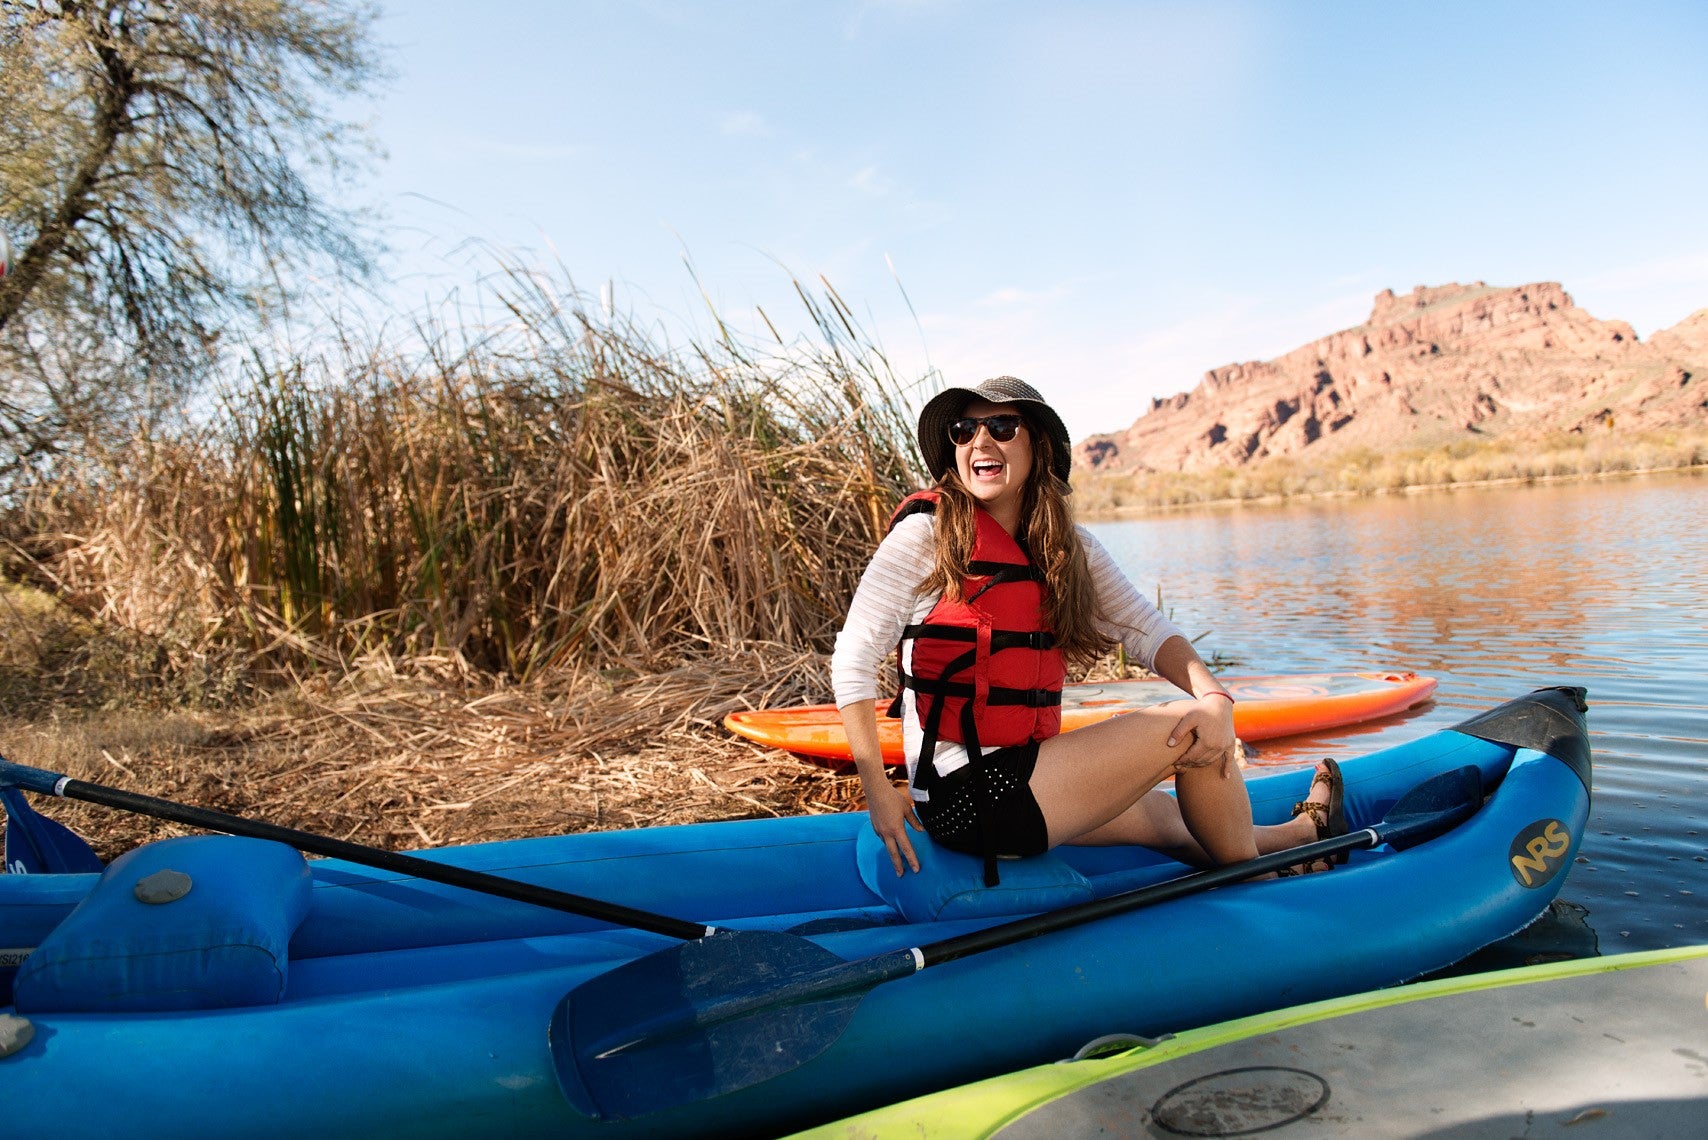 Nicola kayaks in the Arizona desert